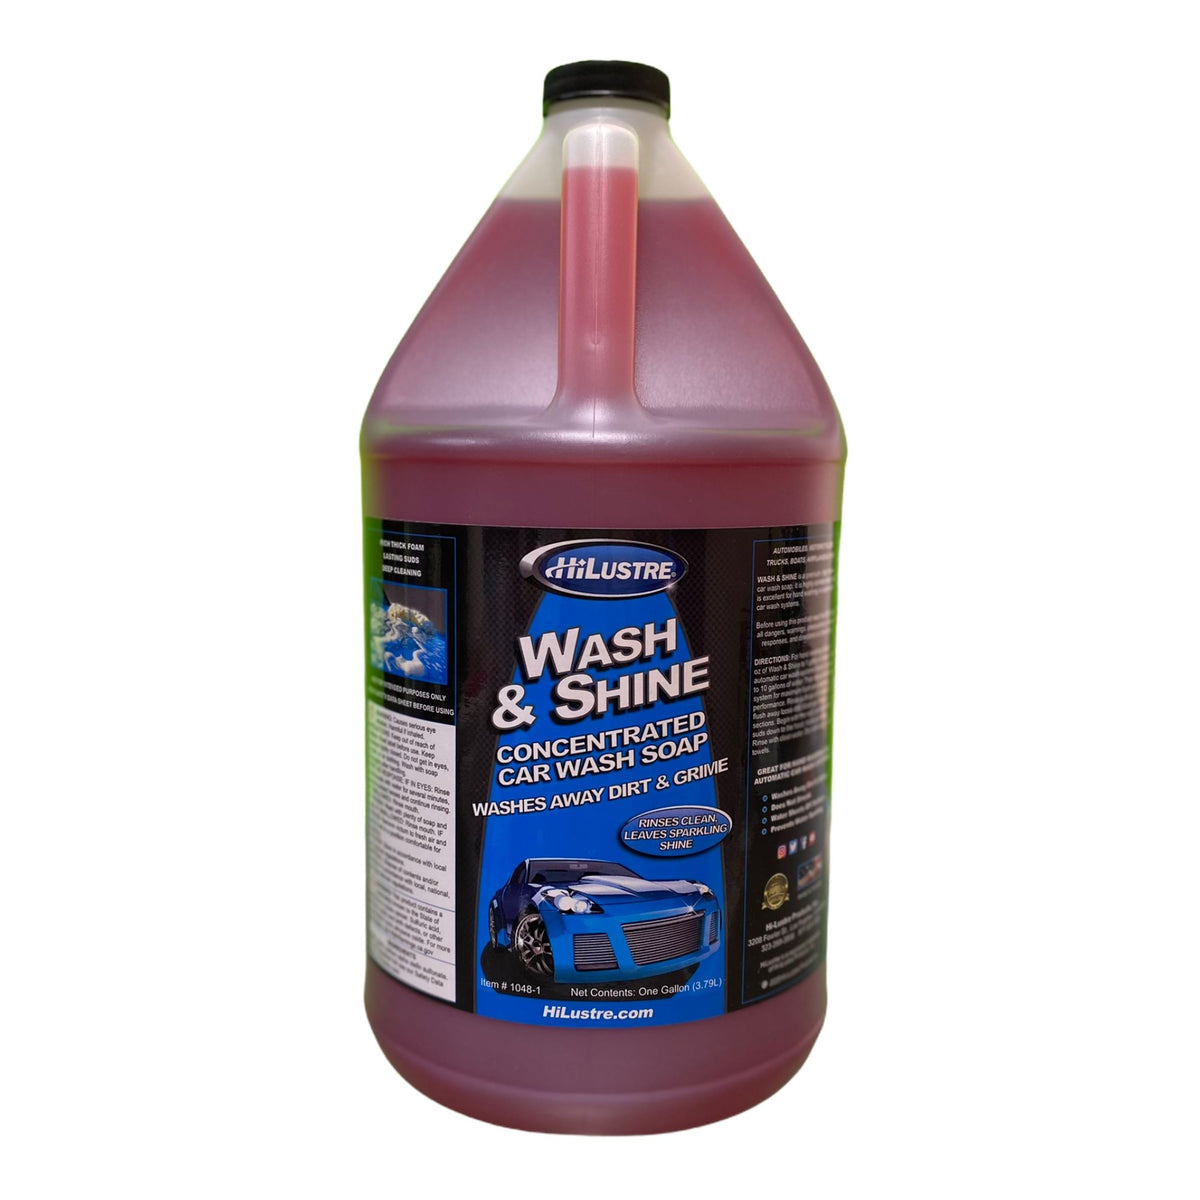 HiLustre Wash & Shine Concentrated Car Wash Soap, Size: 1 Gal